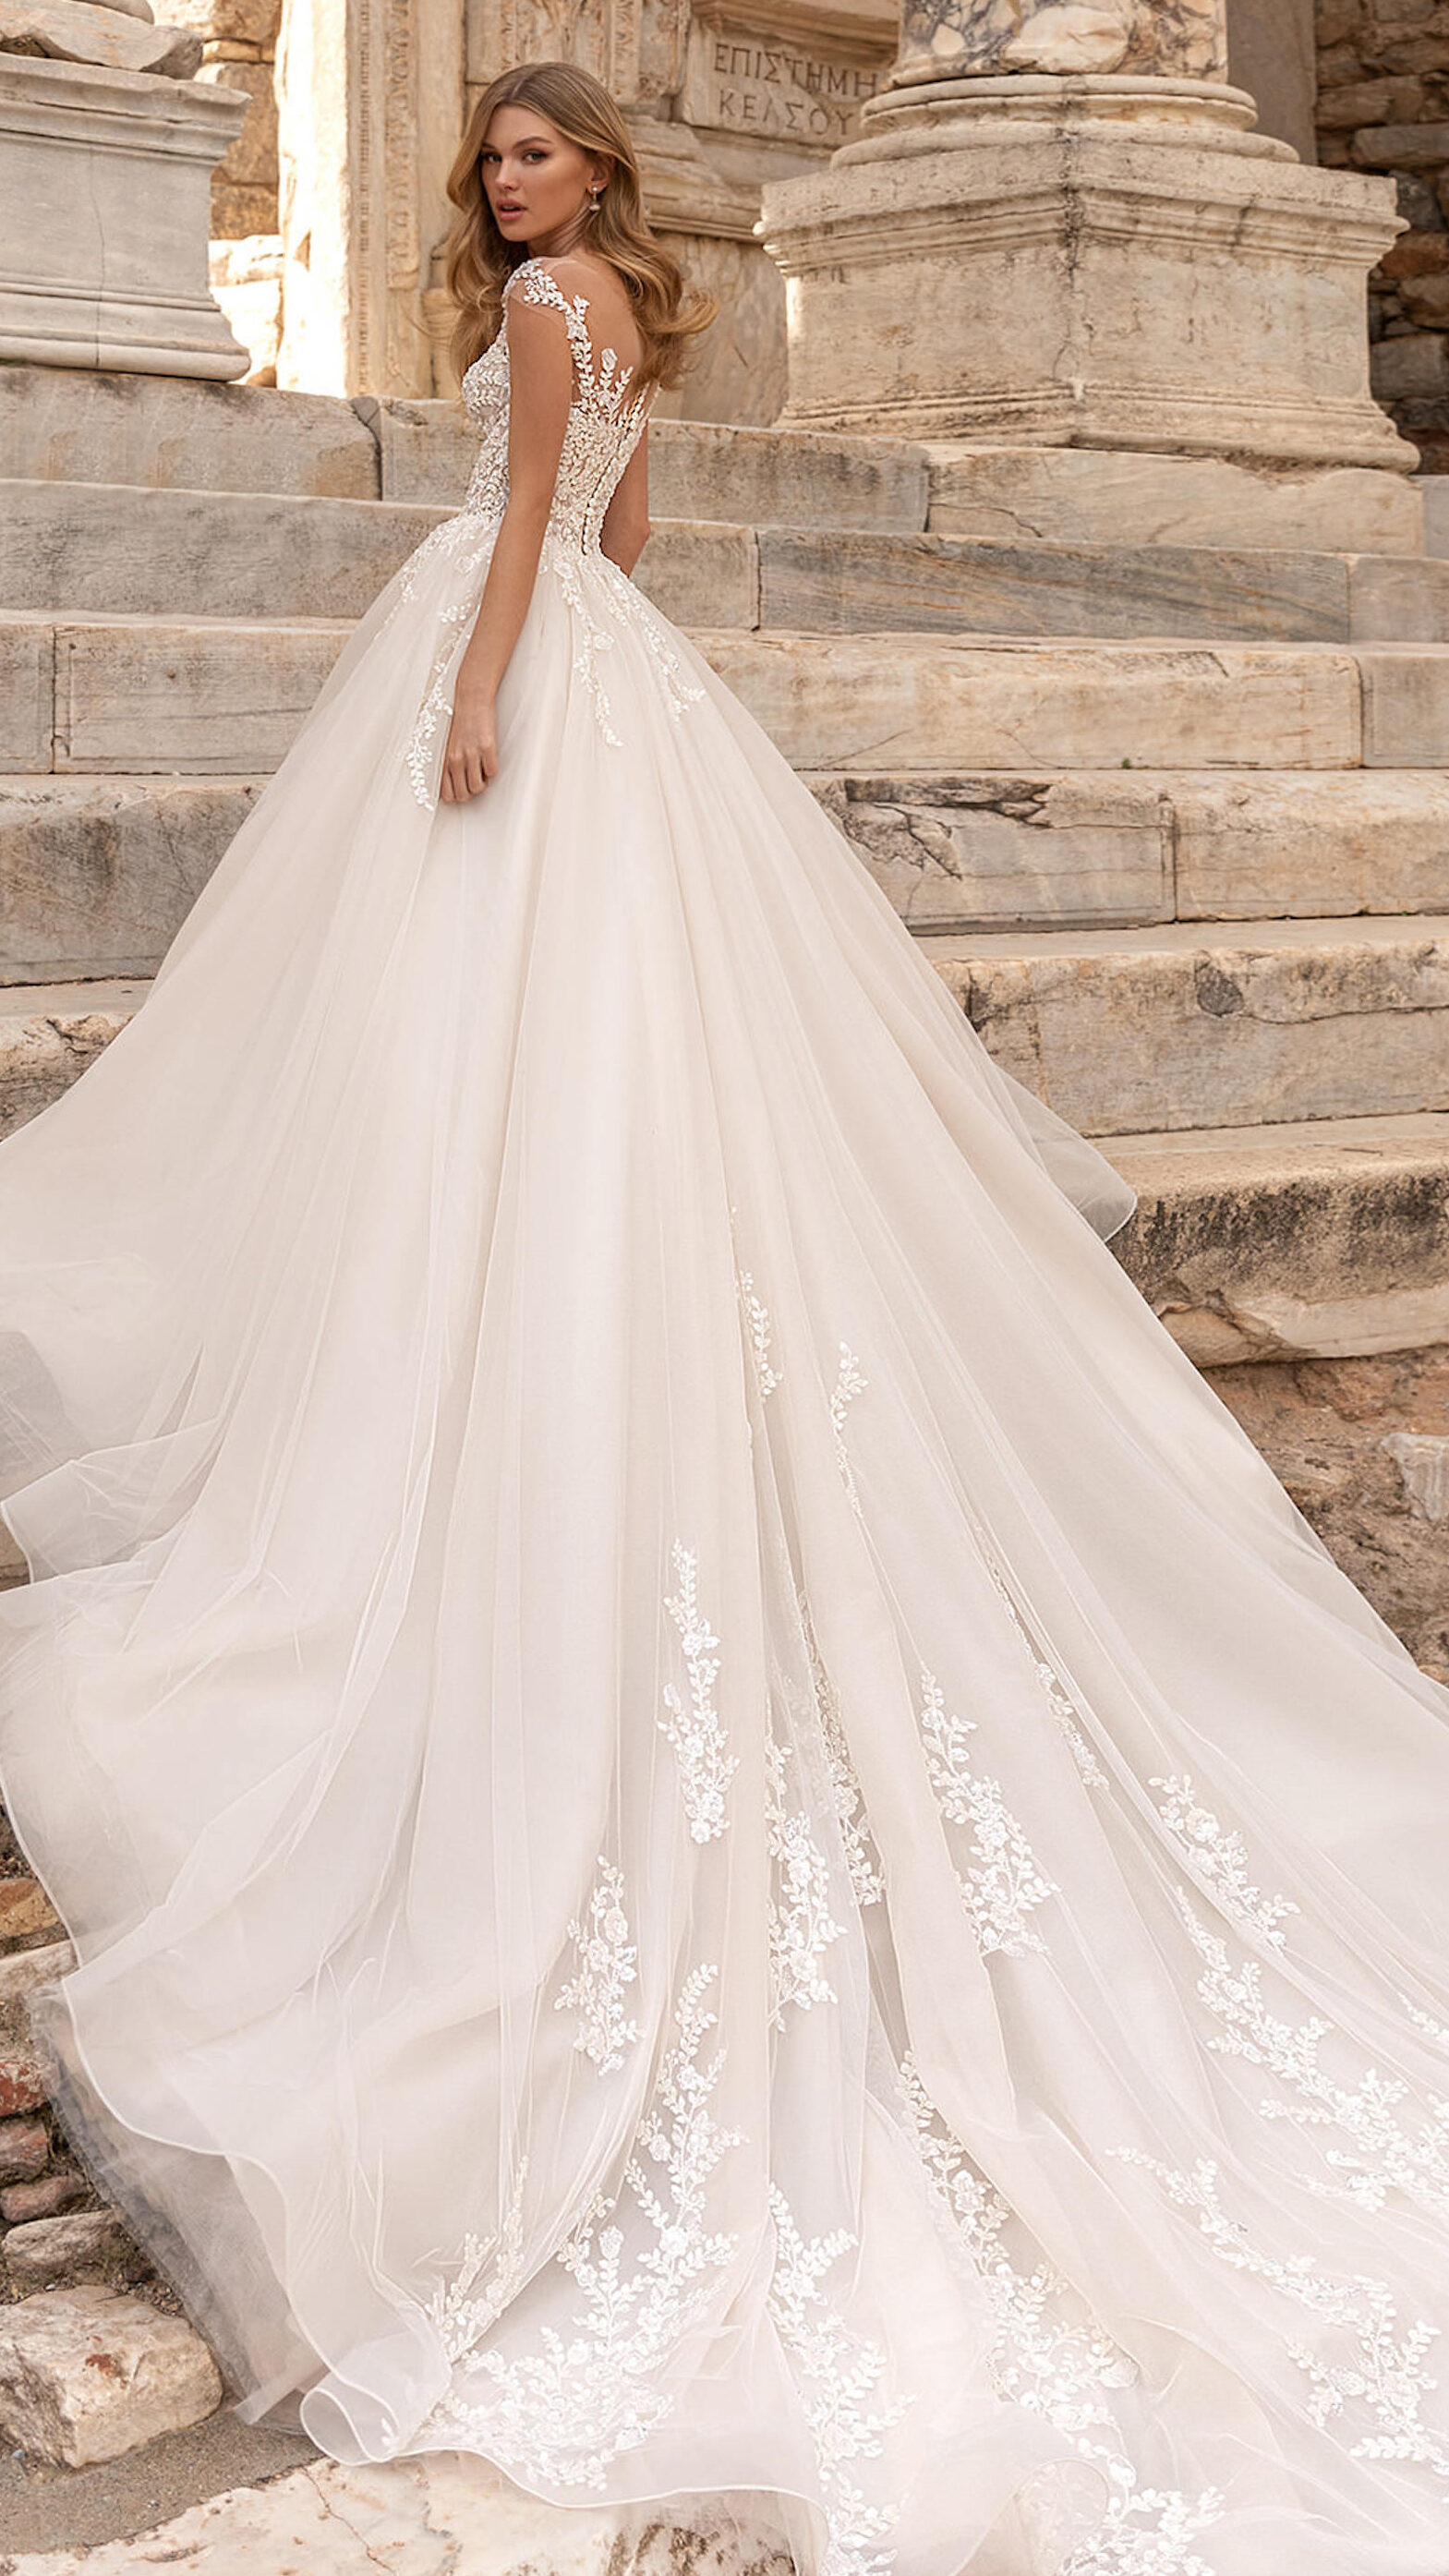 Melanie by Oliver Martino wedding dress